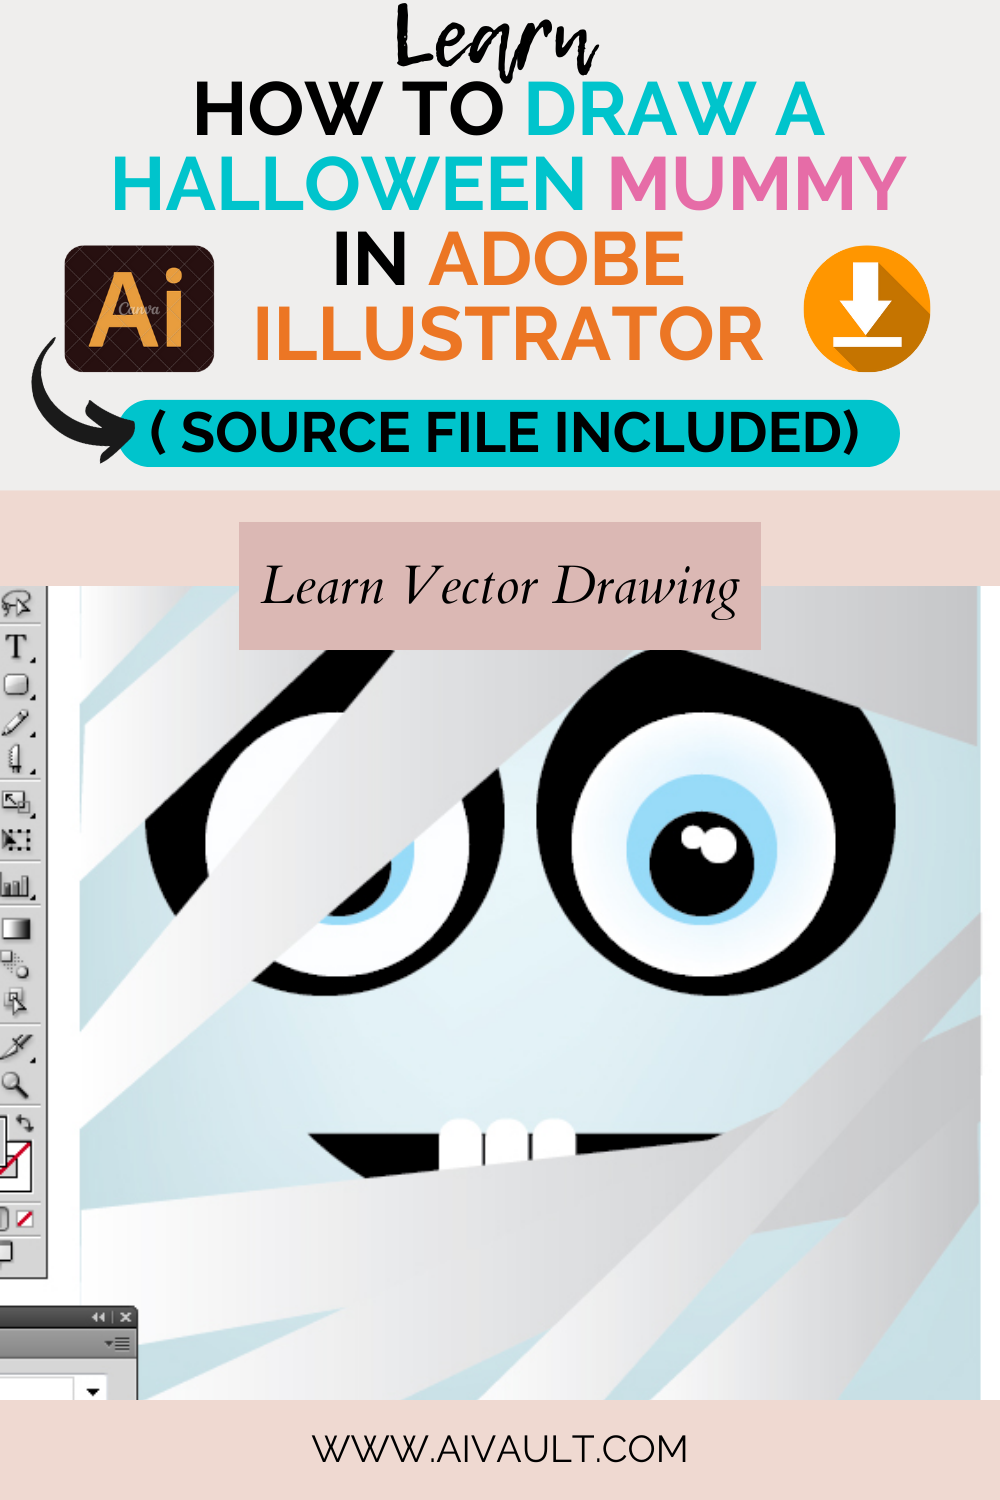 Adobe illustrator tutorial draw a vector illustrato halloween character 